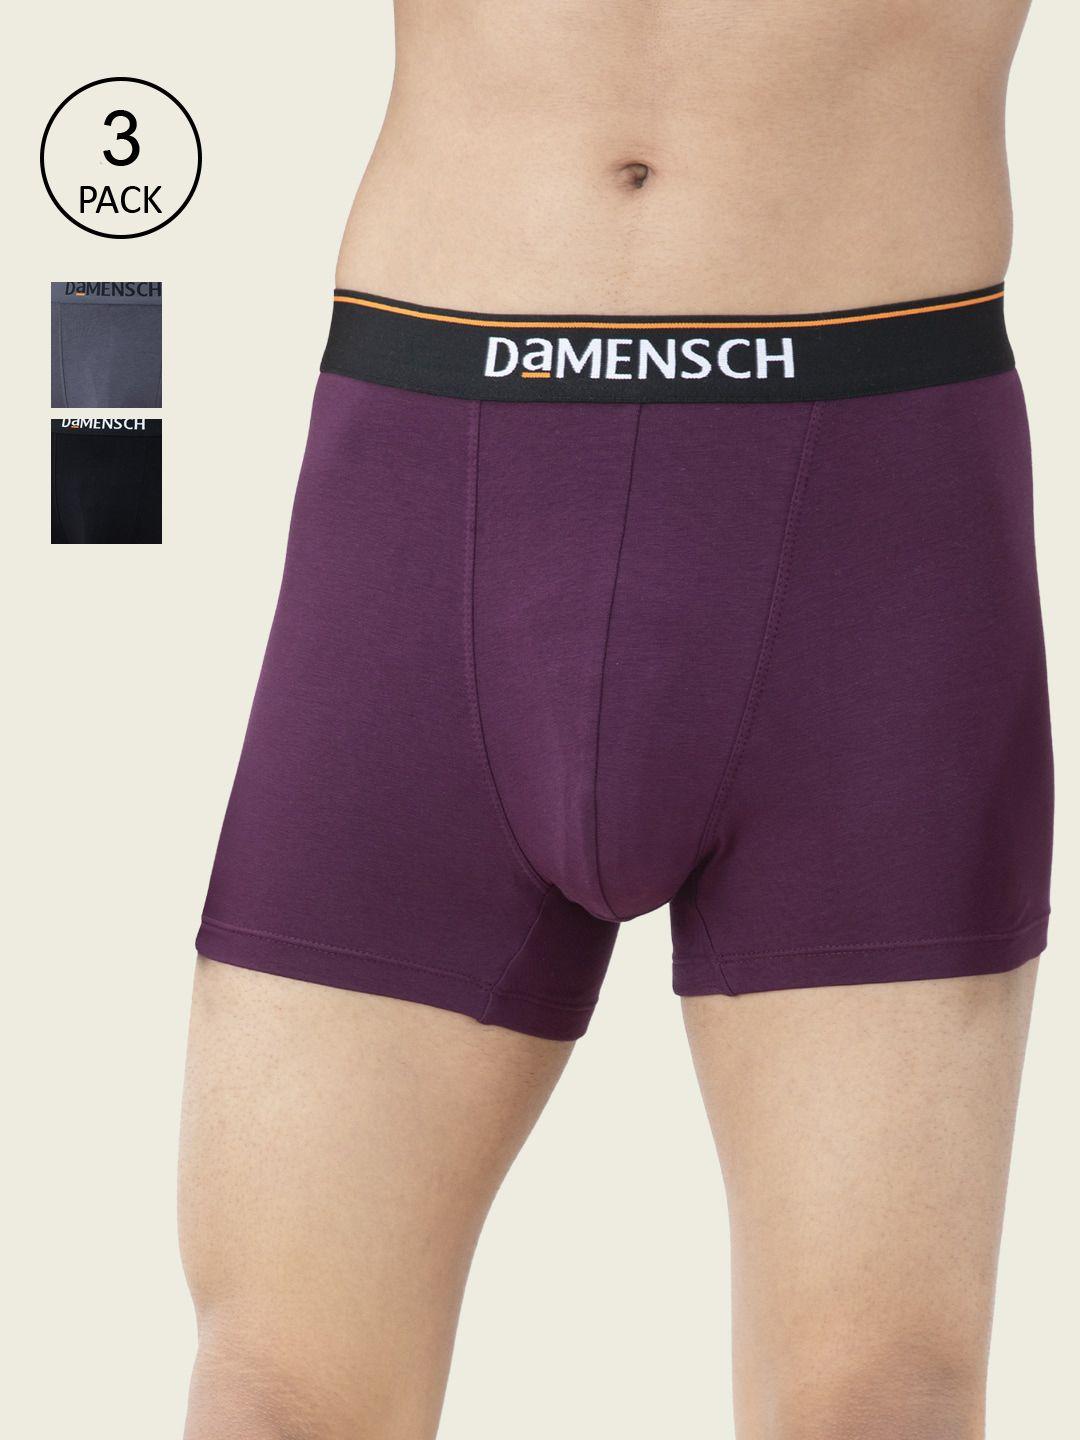 damensch-men-pack-of-3-deo-cotton-anti-bacterial-moisture-free-trunks